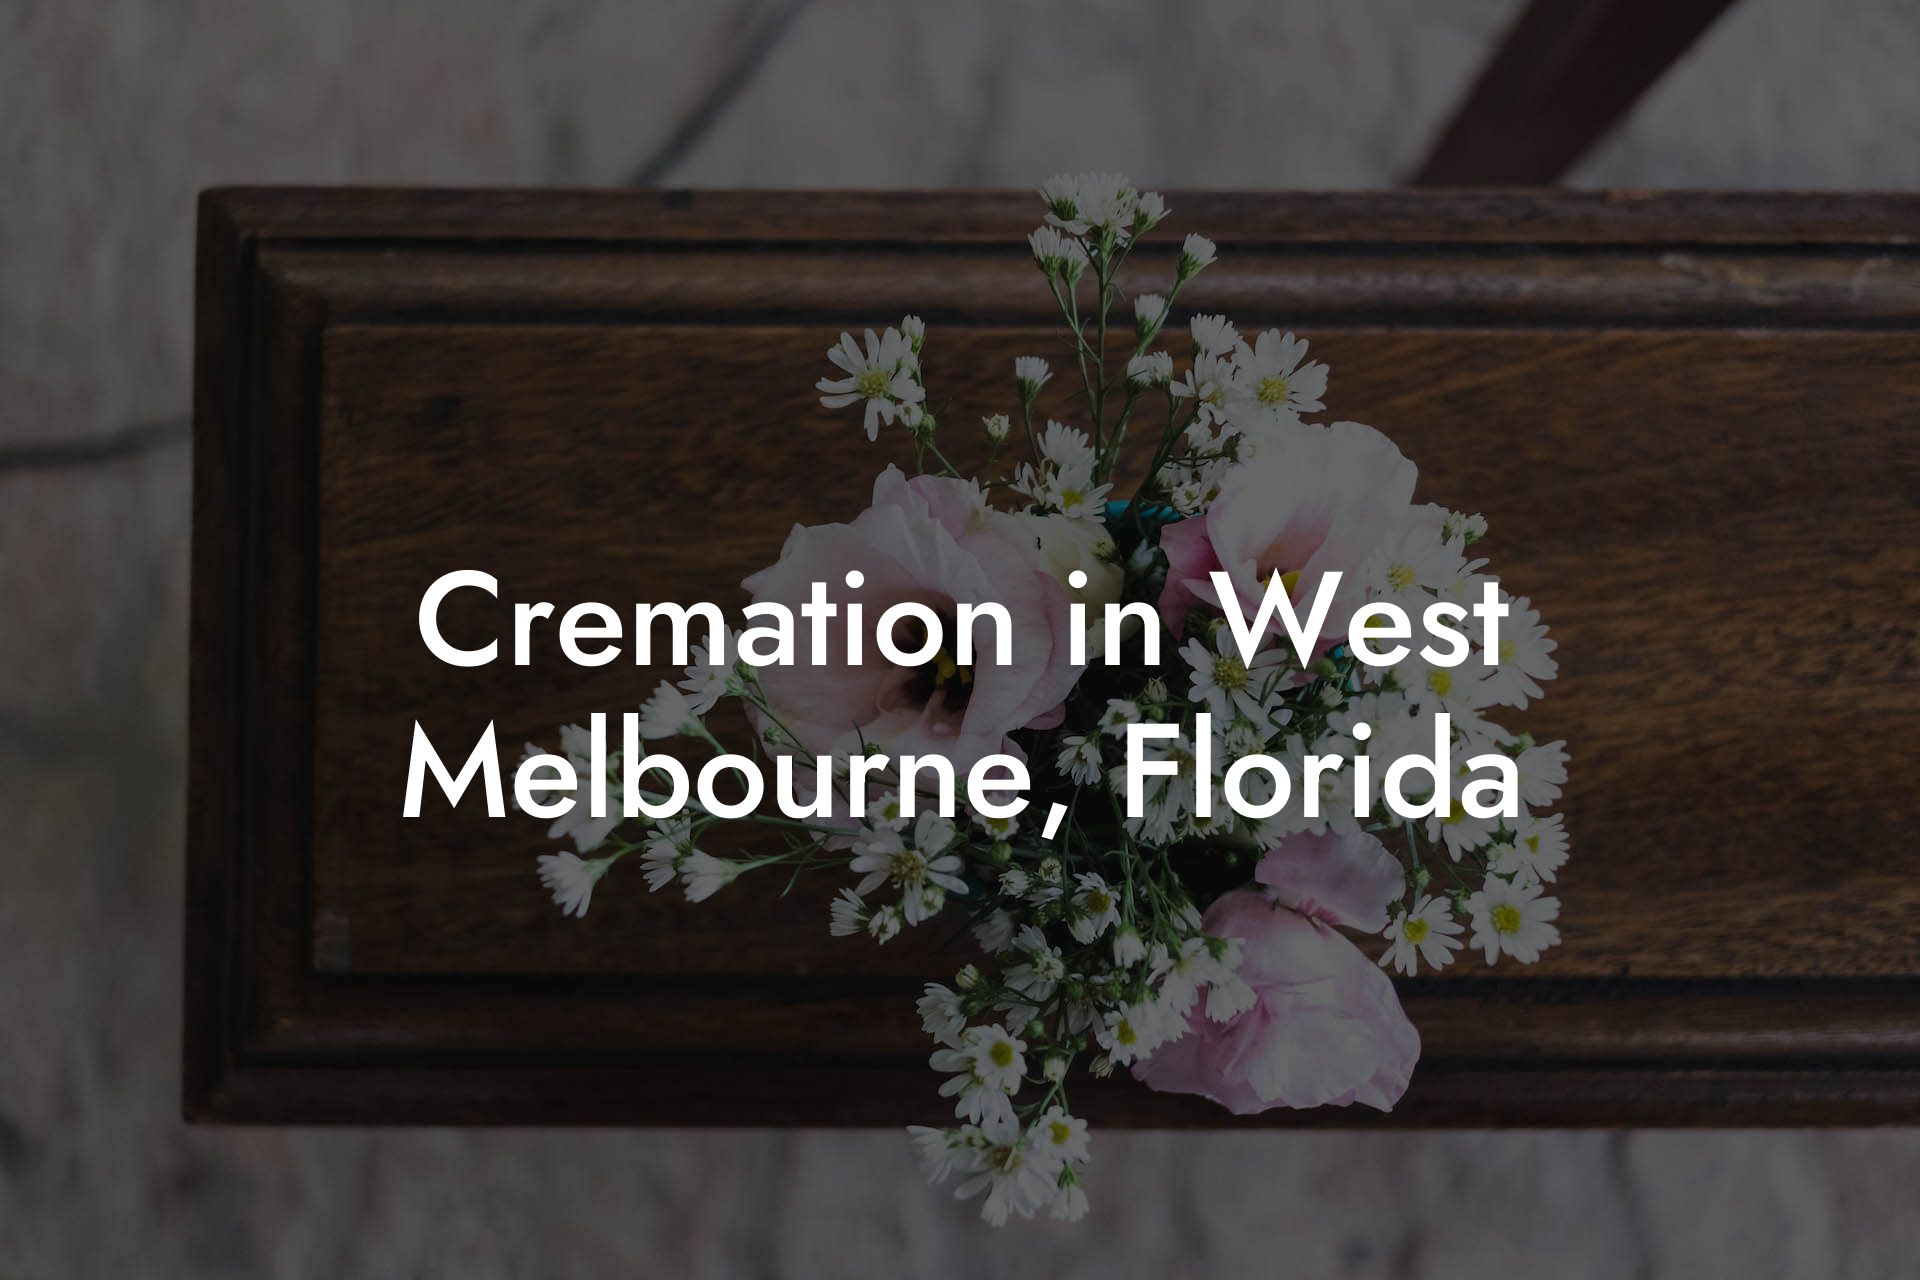 Cremation in West Melbourne, Florida